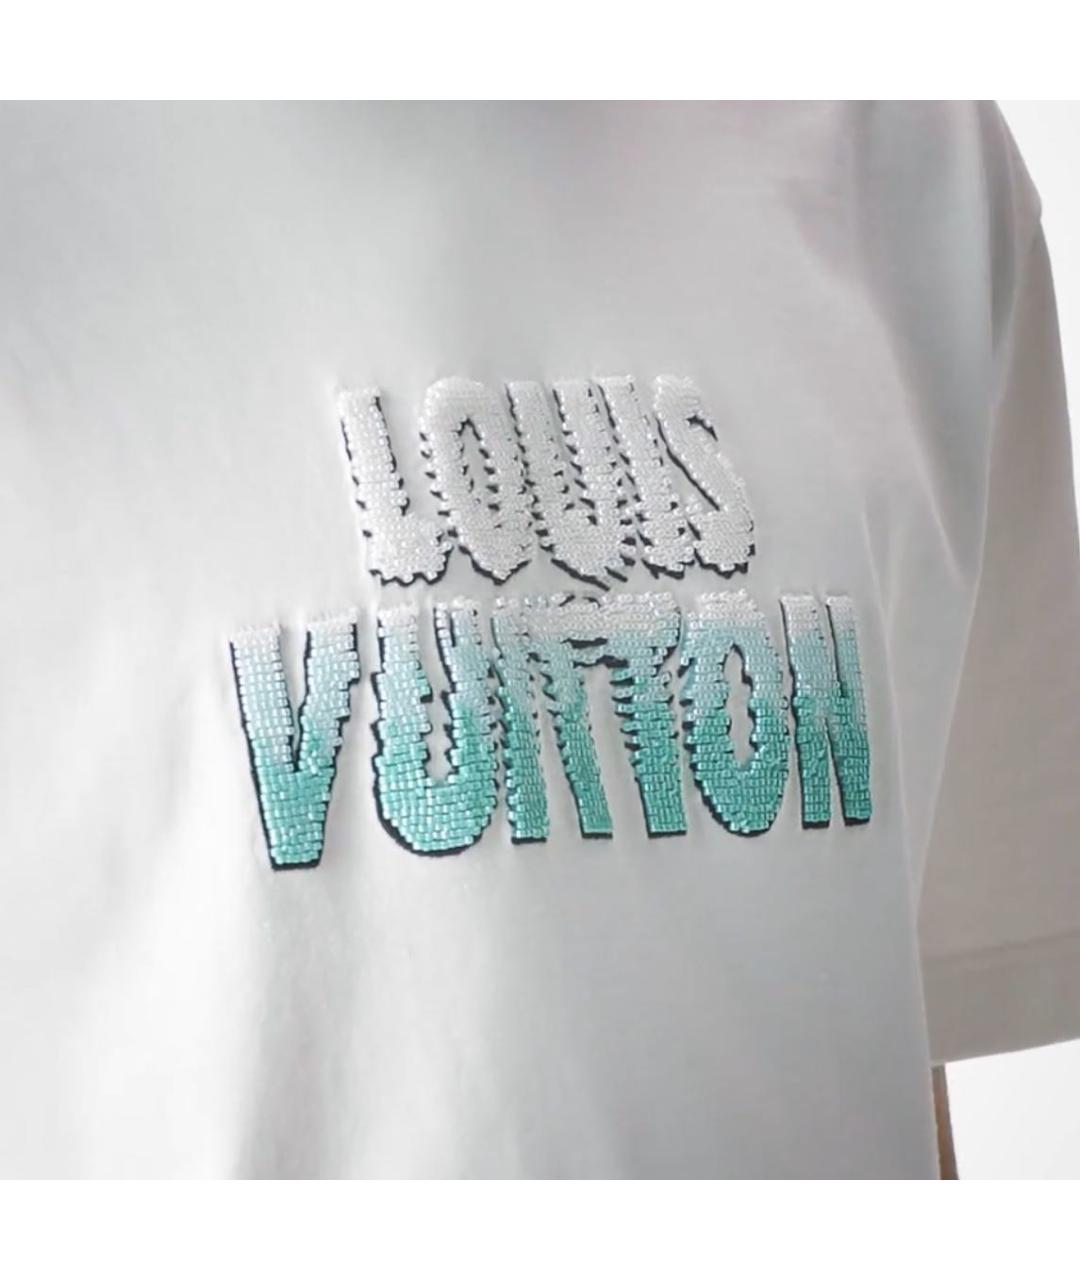 Louis Vuitton 1ABJMV Embroidered Beads Cotton T-Shirt , White, XXL